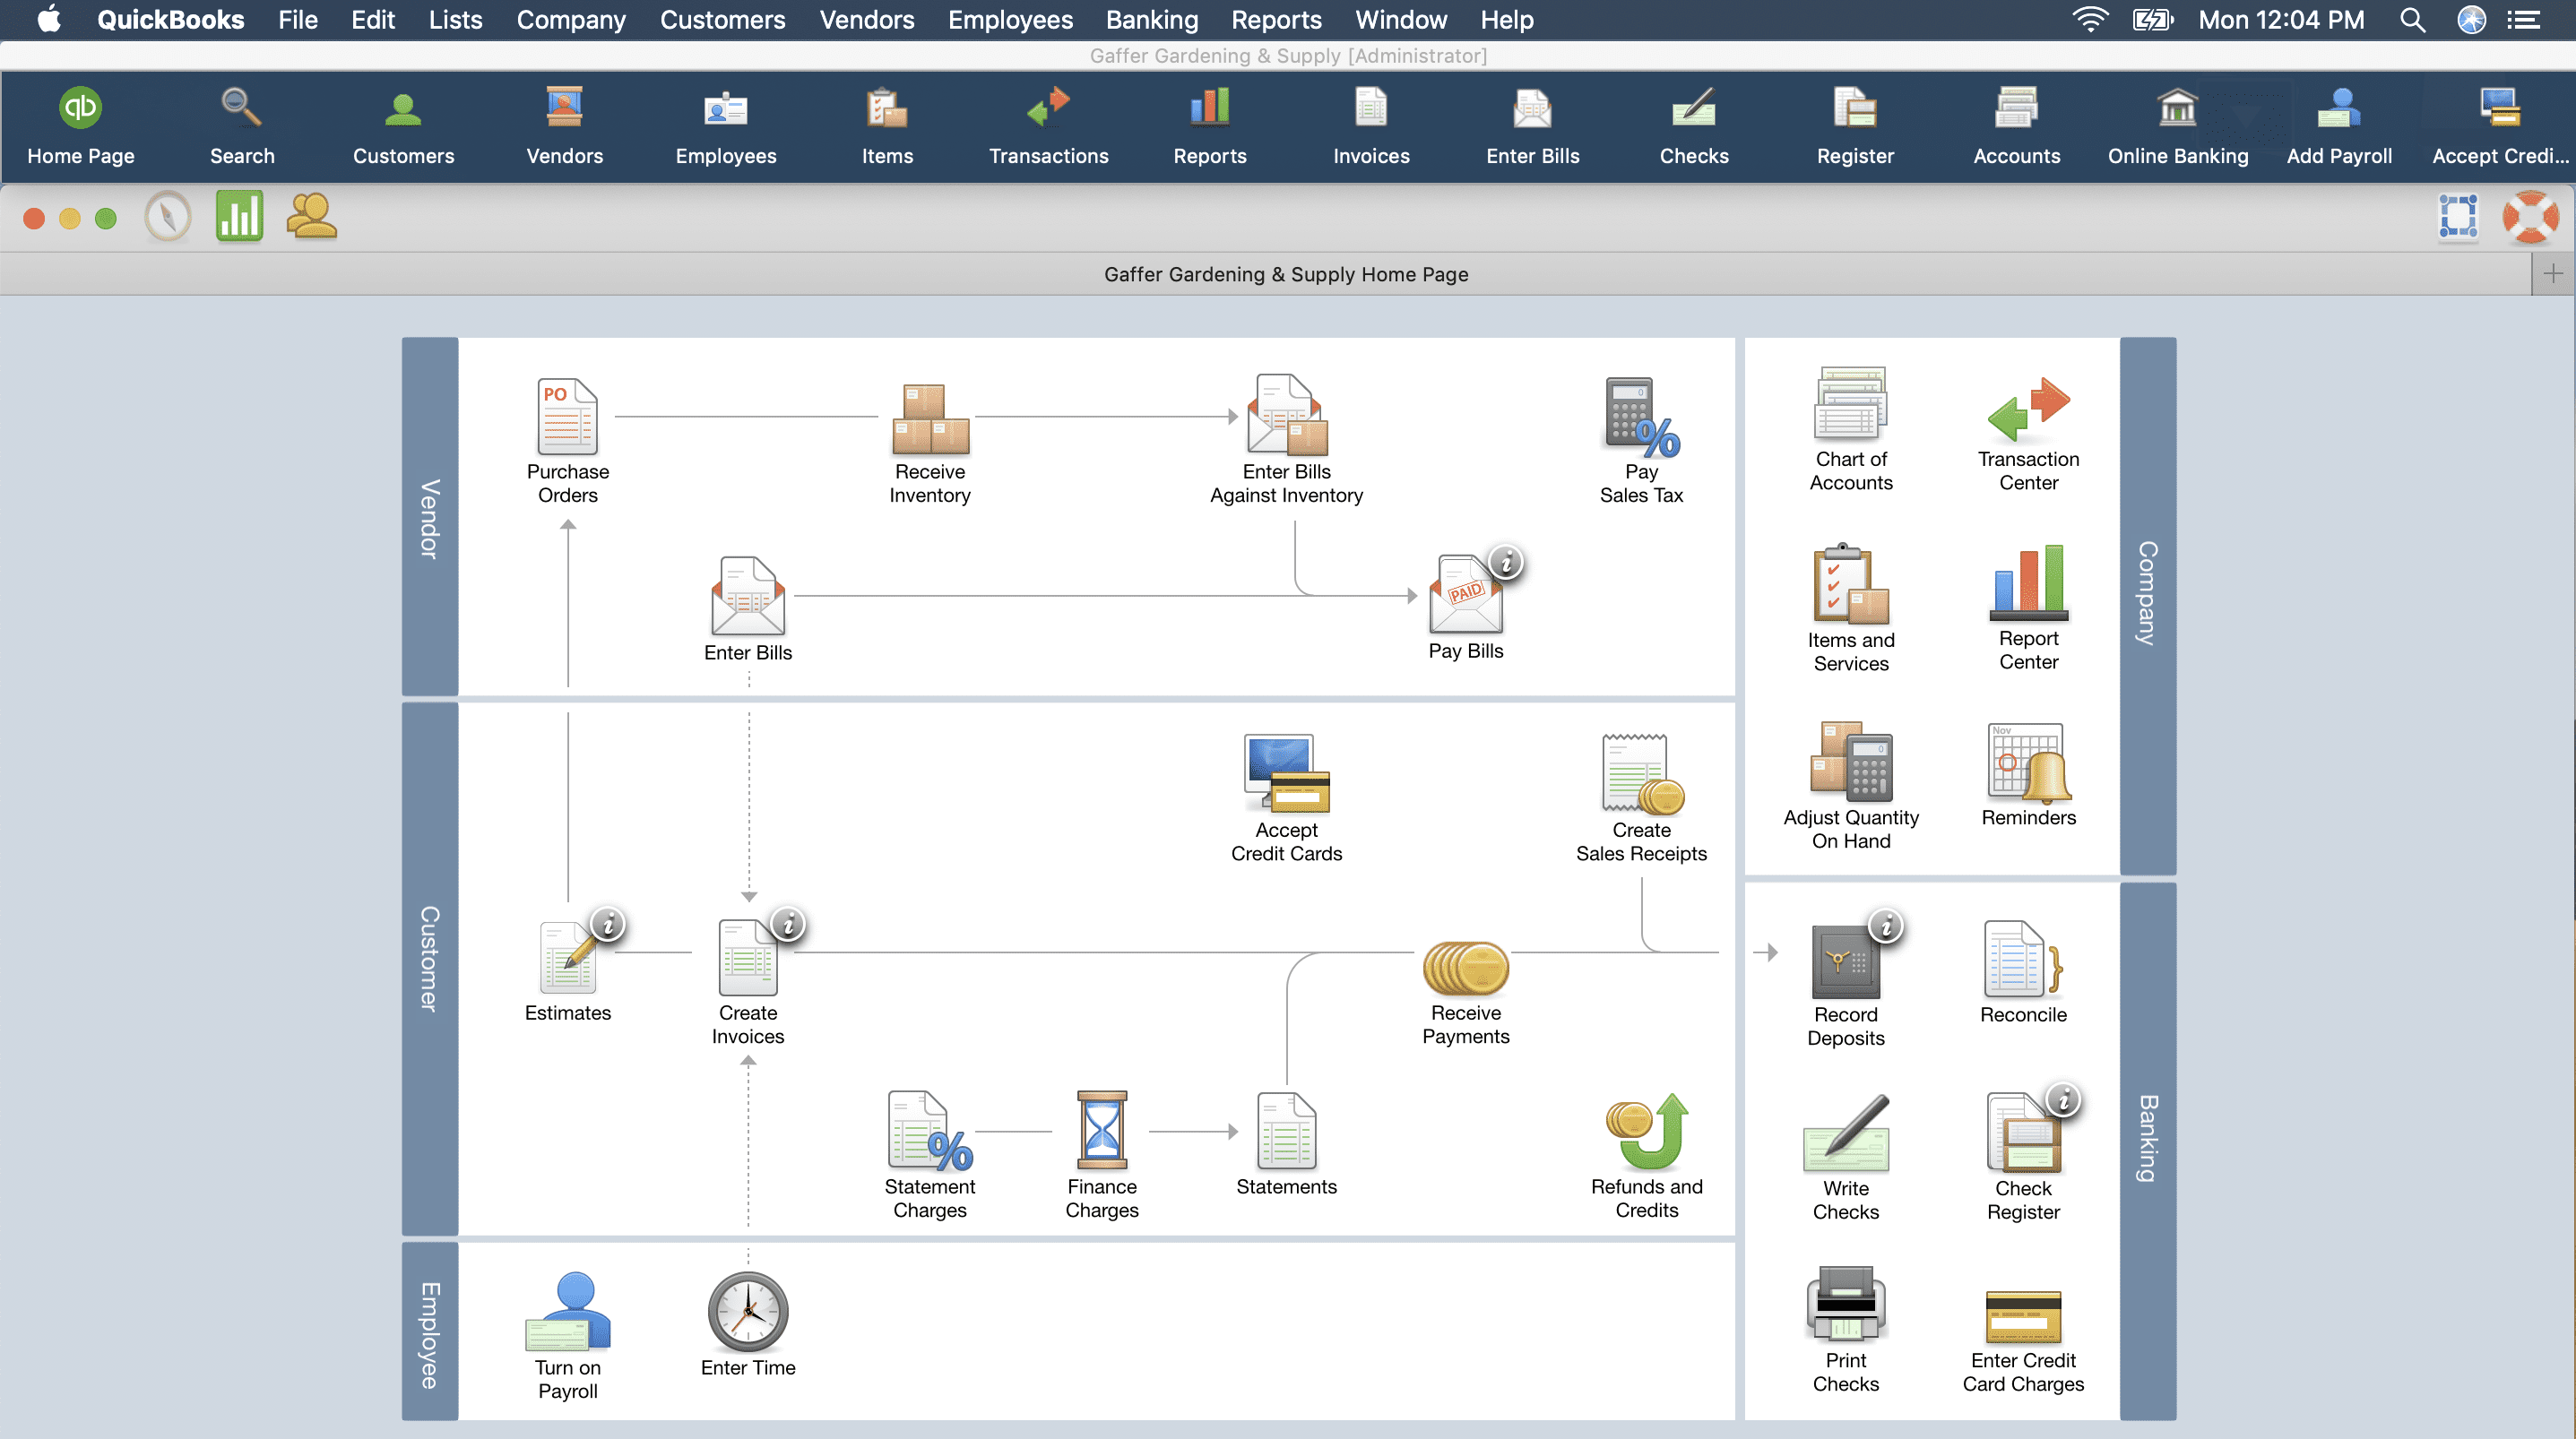 quickbooks desktop app for mac